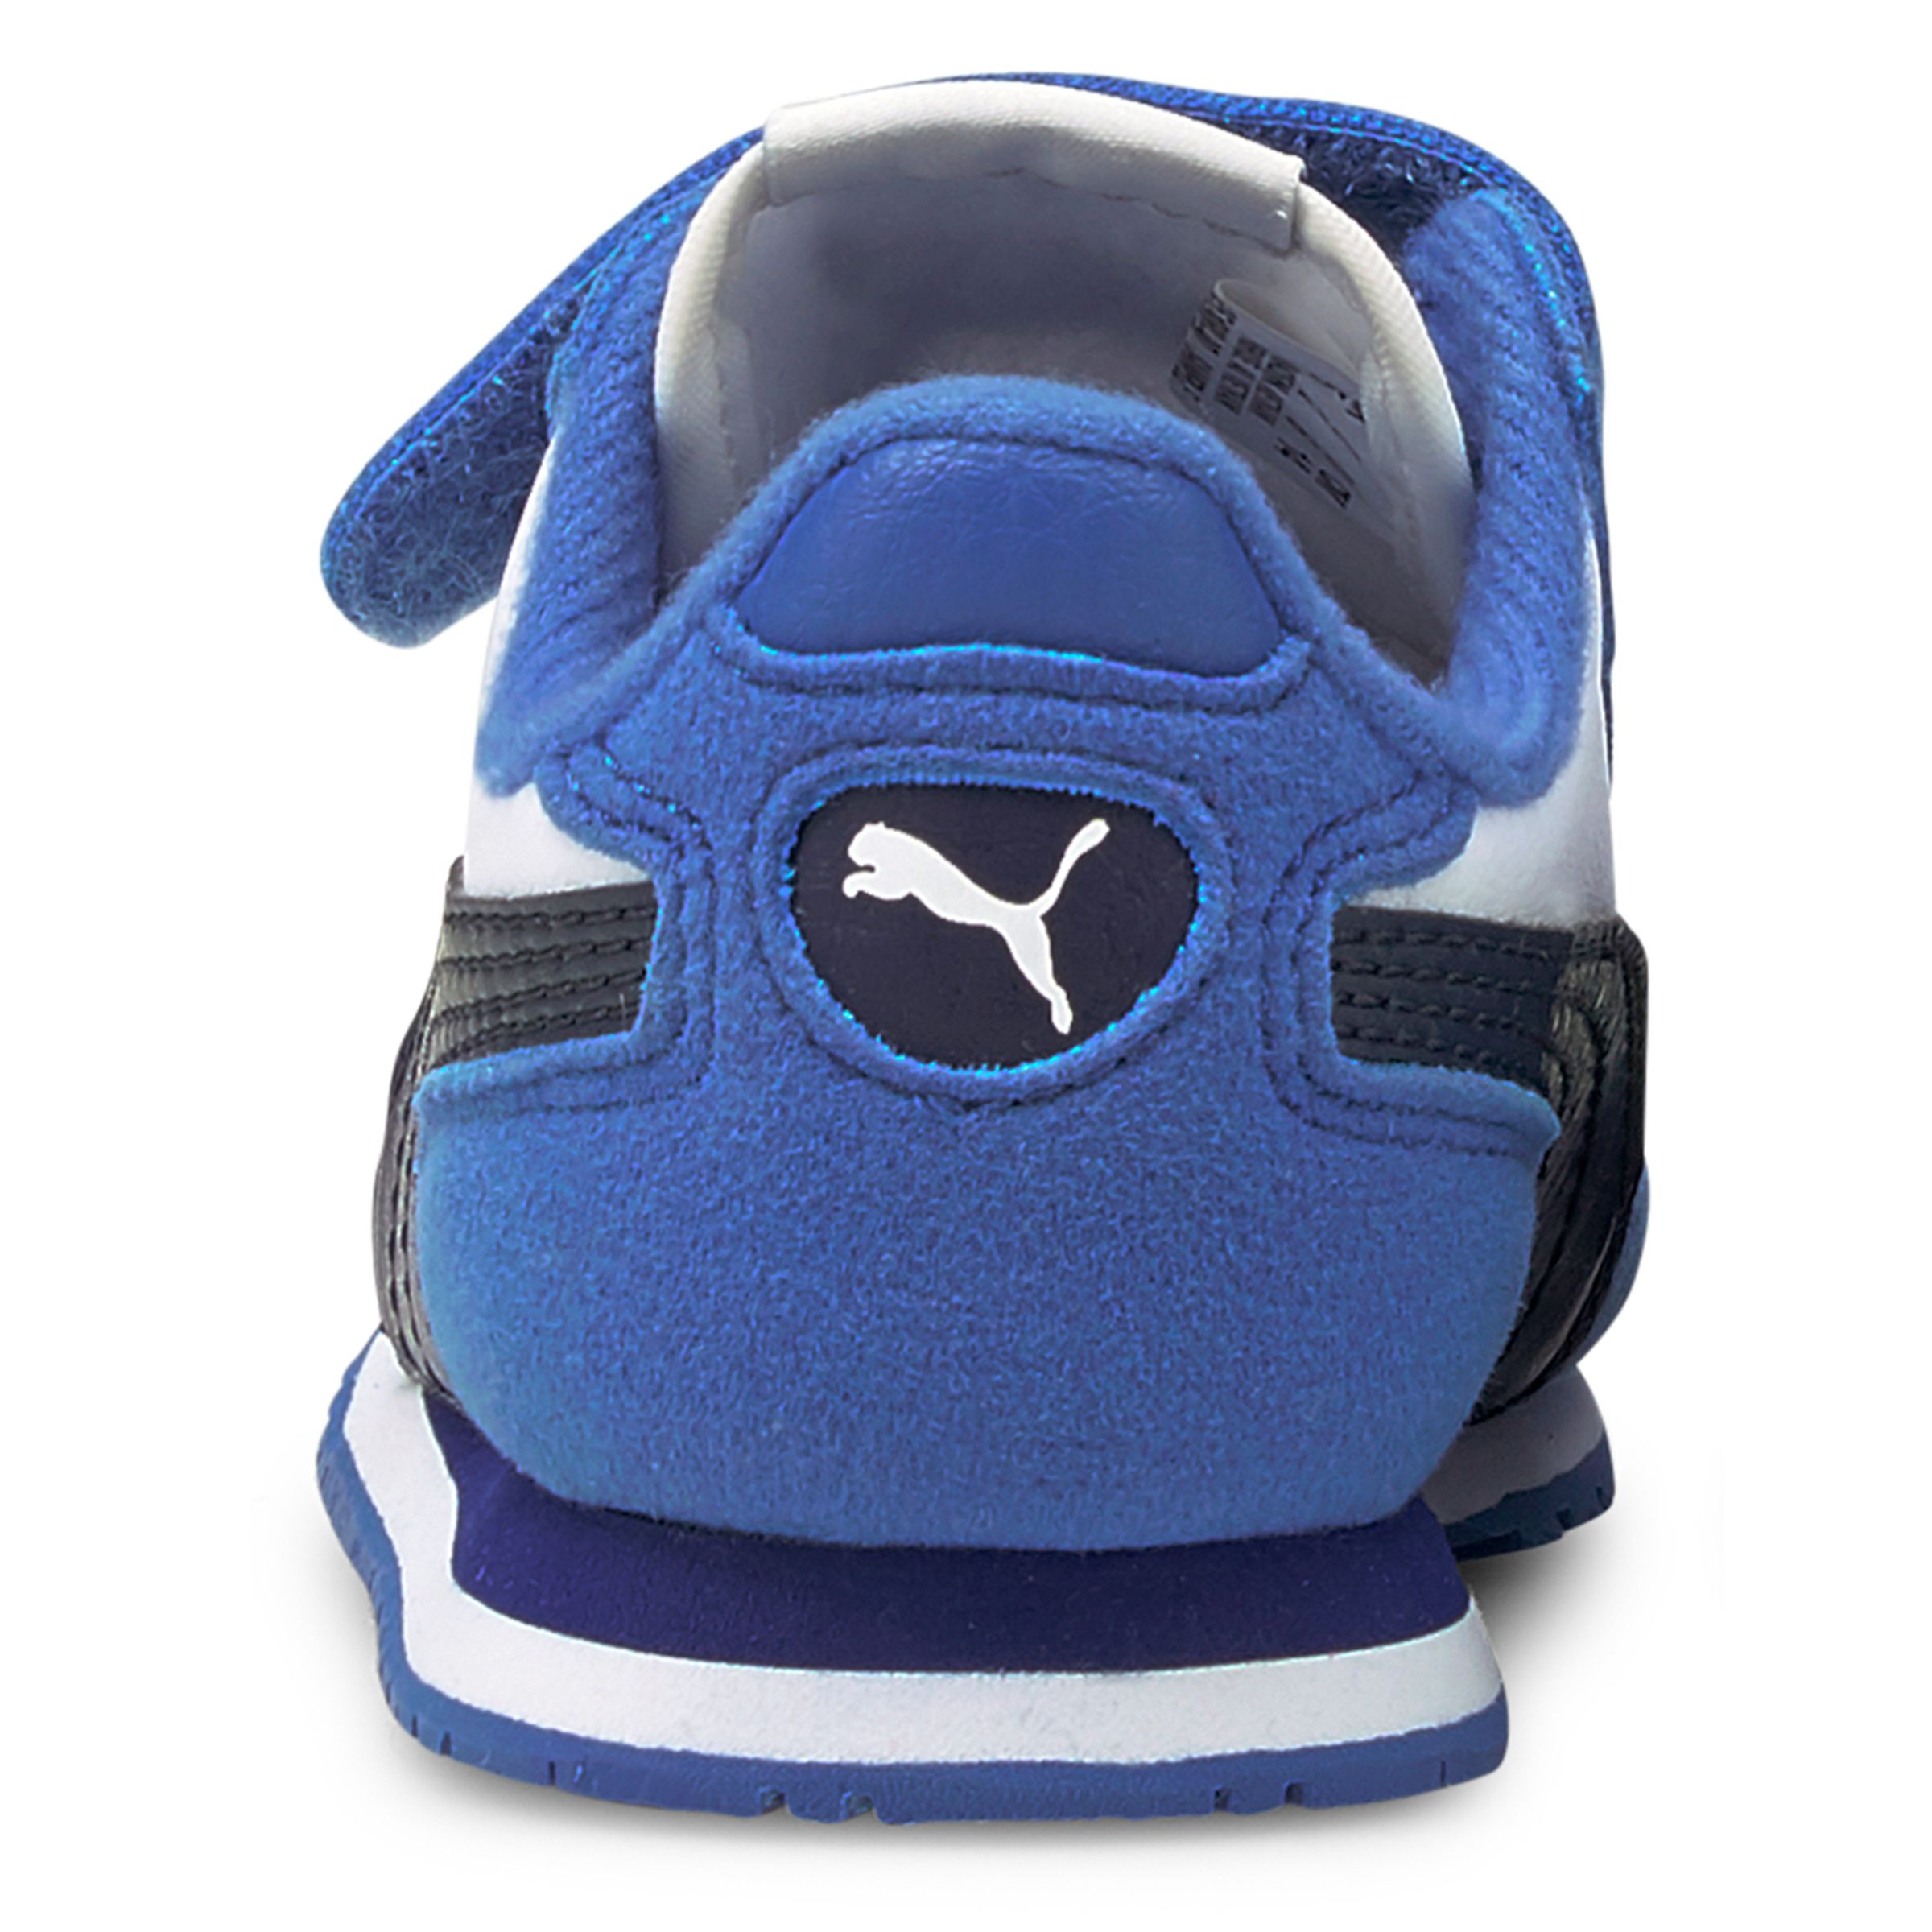 PUMA Cabana Racer SL V Inf Kinder Sneaker Klettverschluss blau 351980